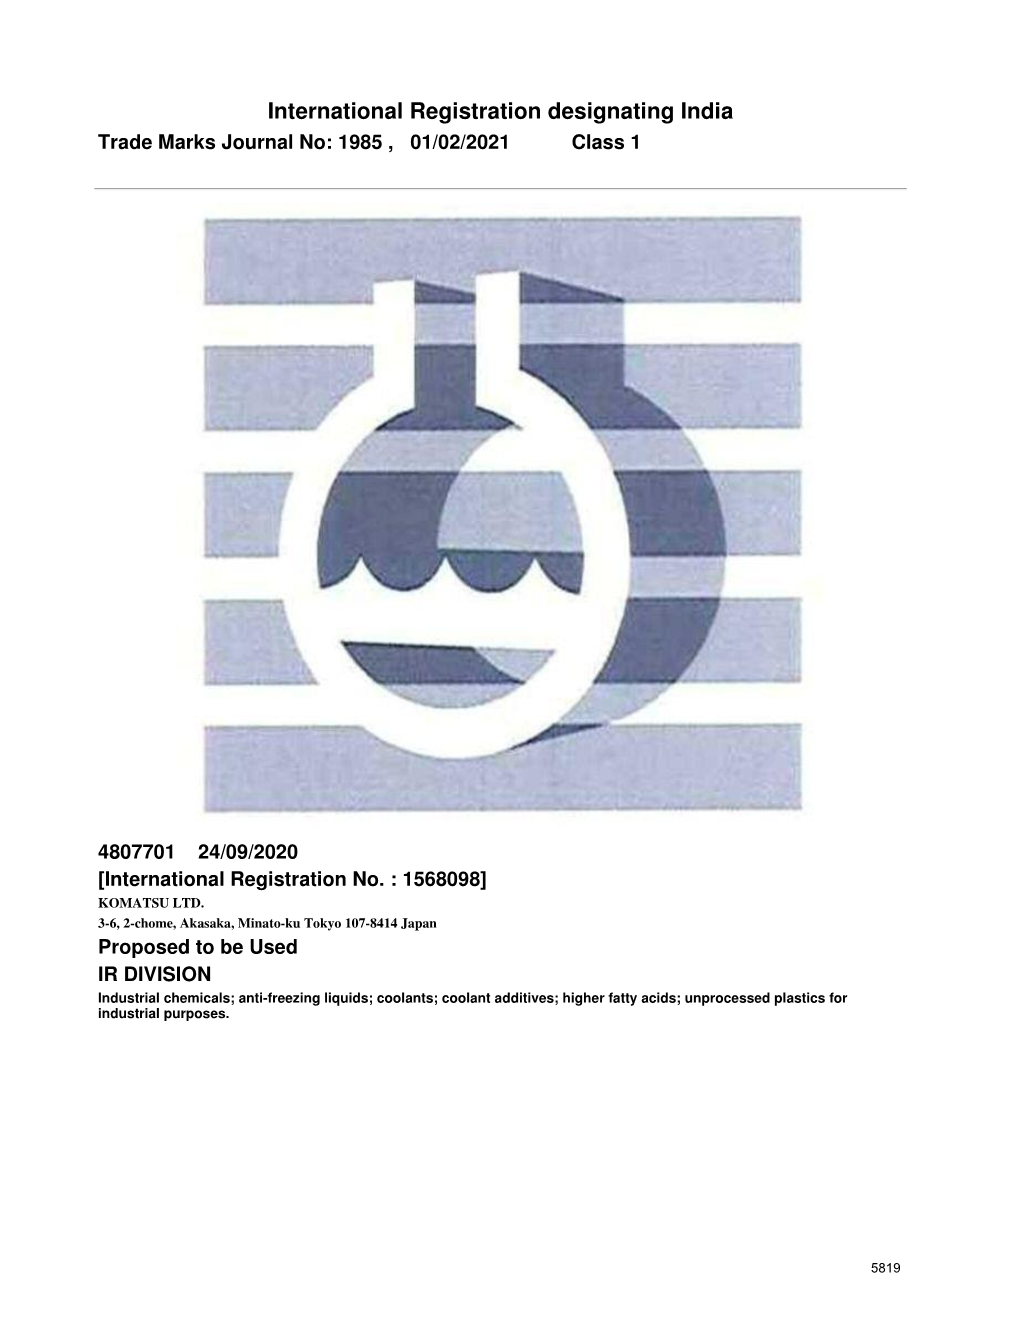 International Registration Designating India Trade Marks Journal No: 1985 , 01/02/2021 Class 1